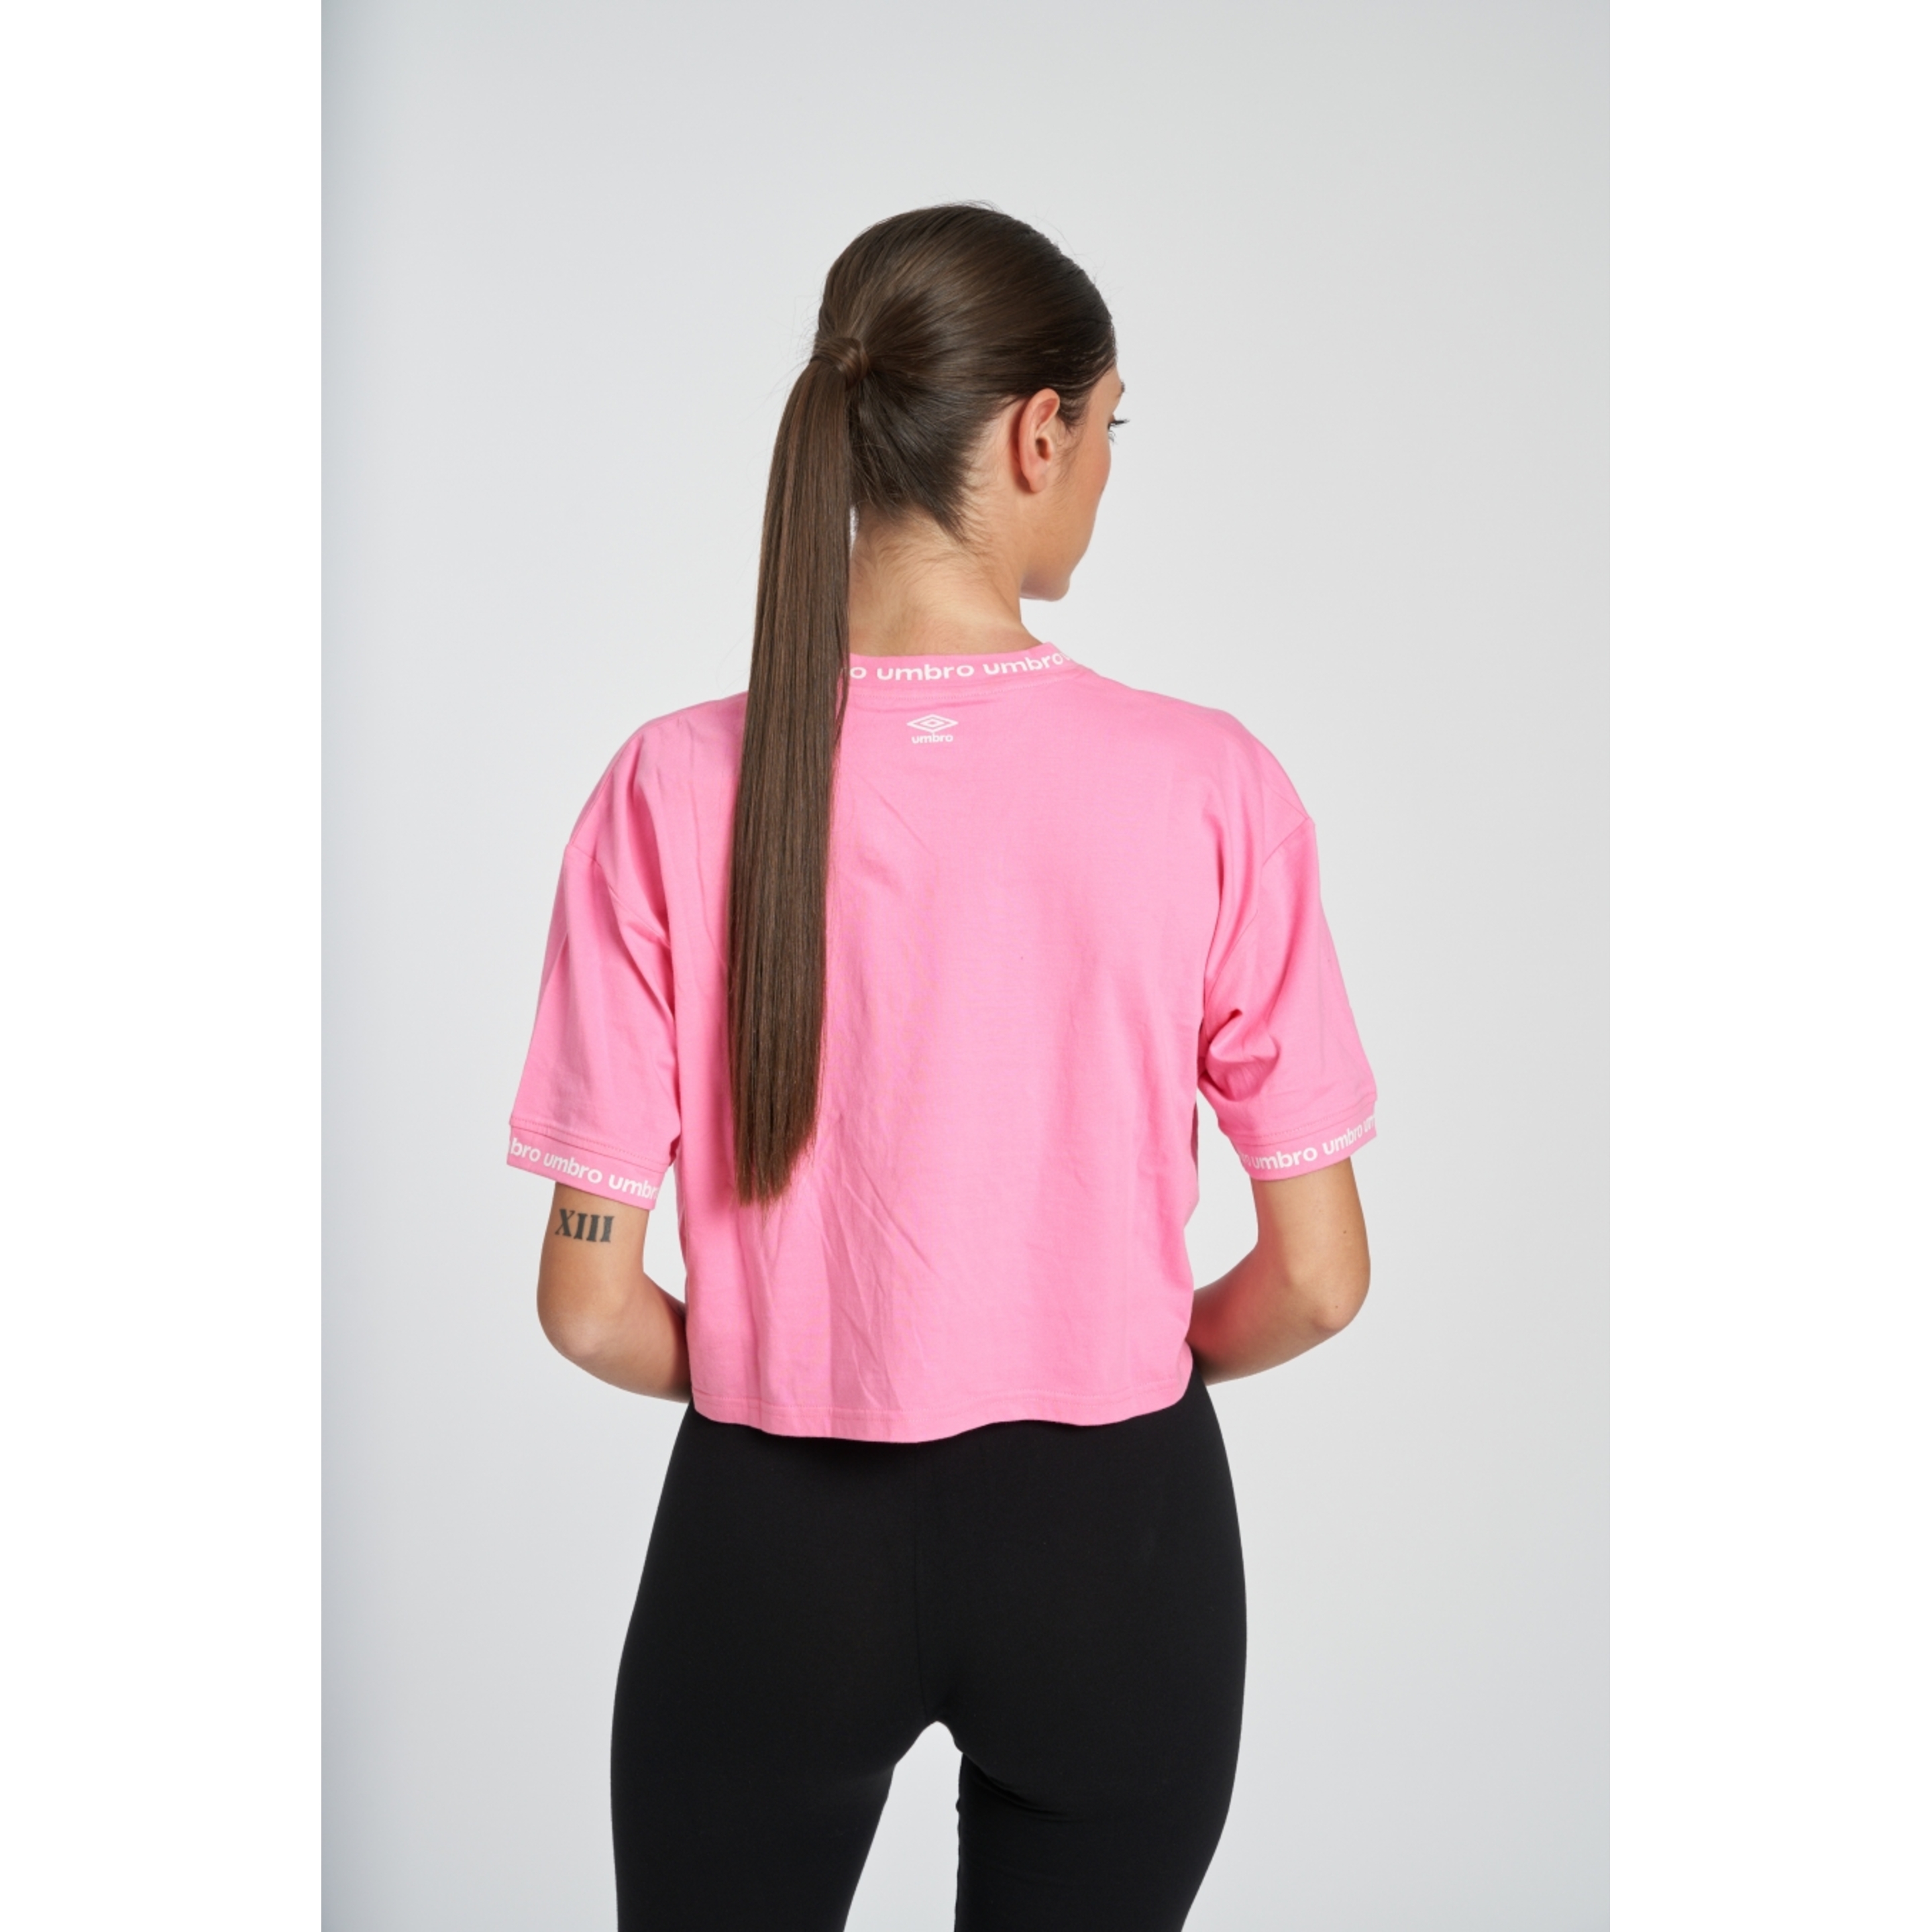 Camiseta Umbro Dorado - Rosa - Camiseta Mujer Manga Corta  MKP